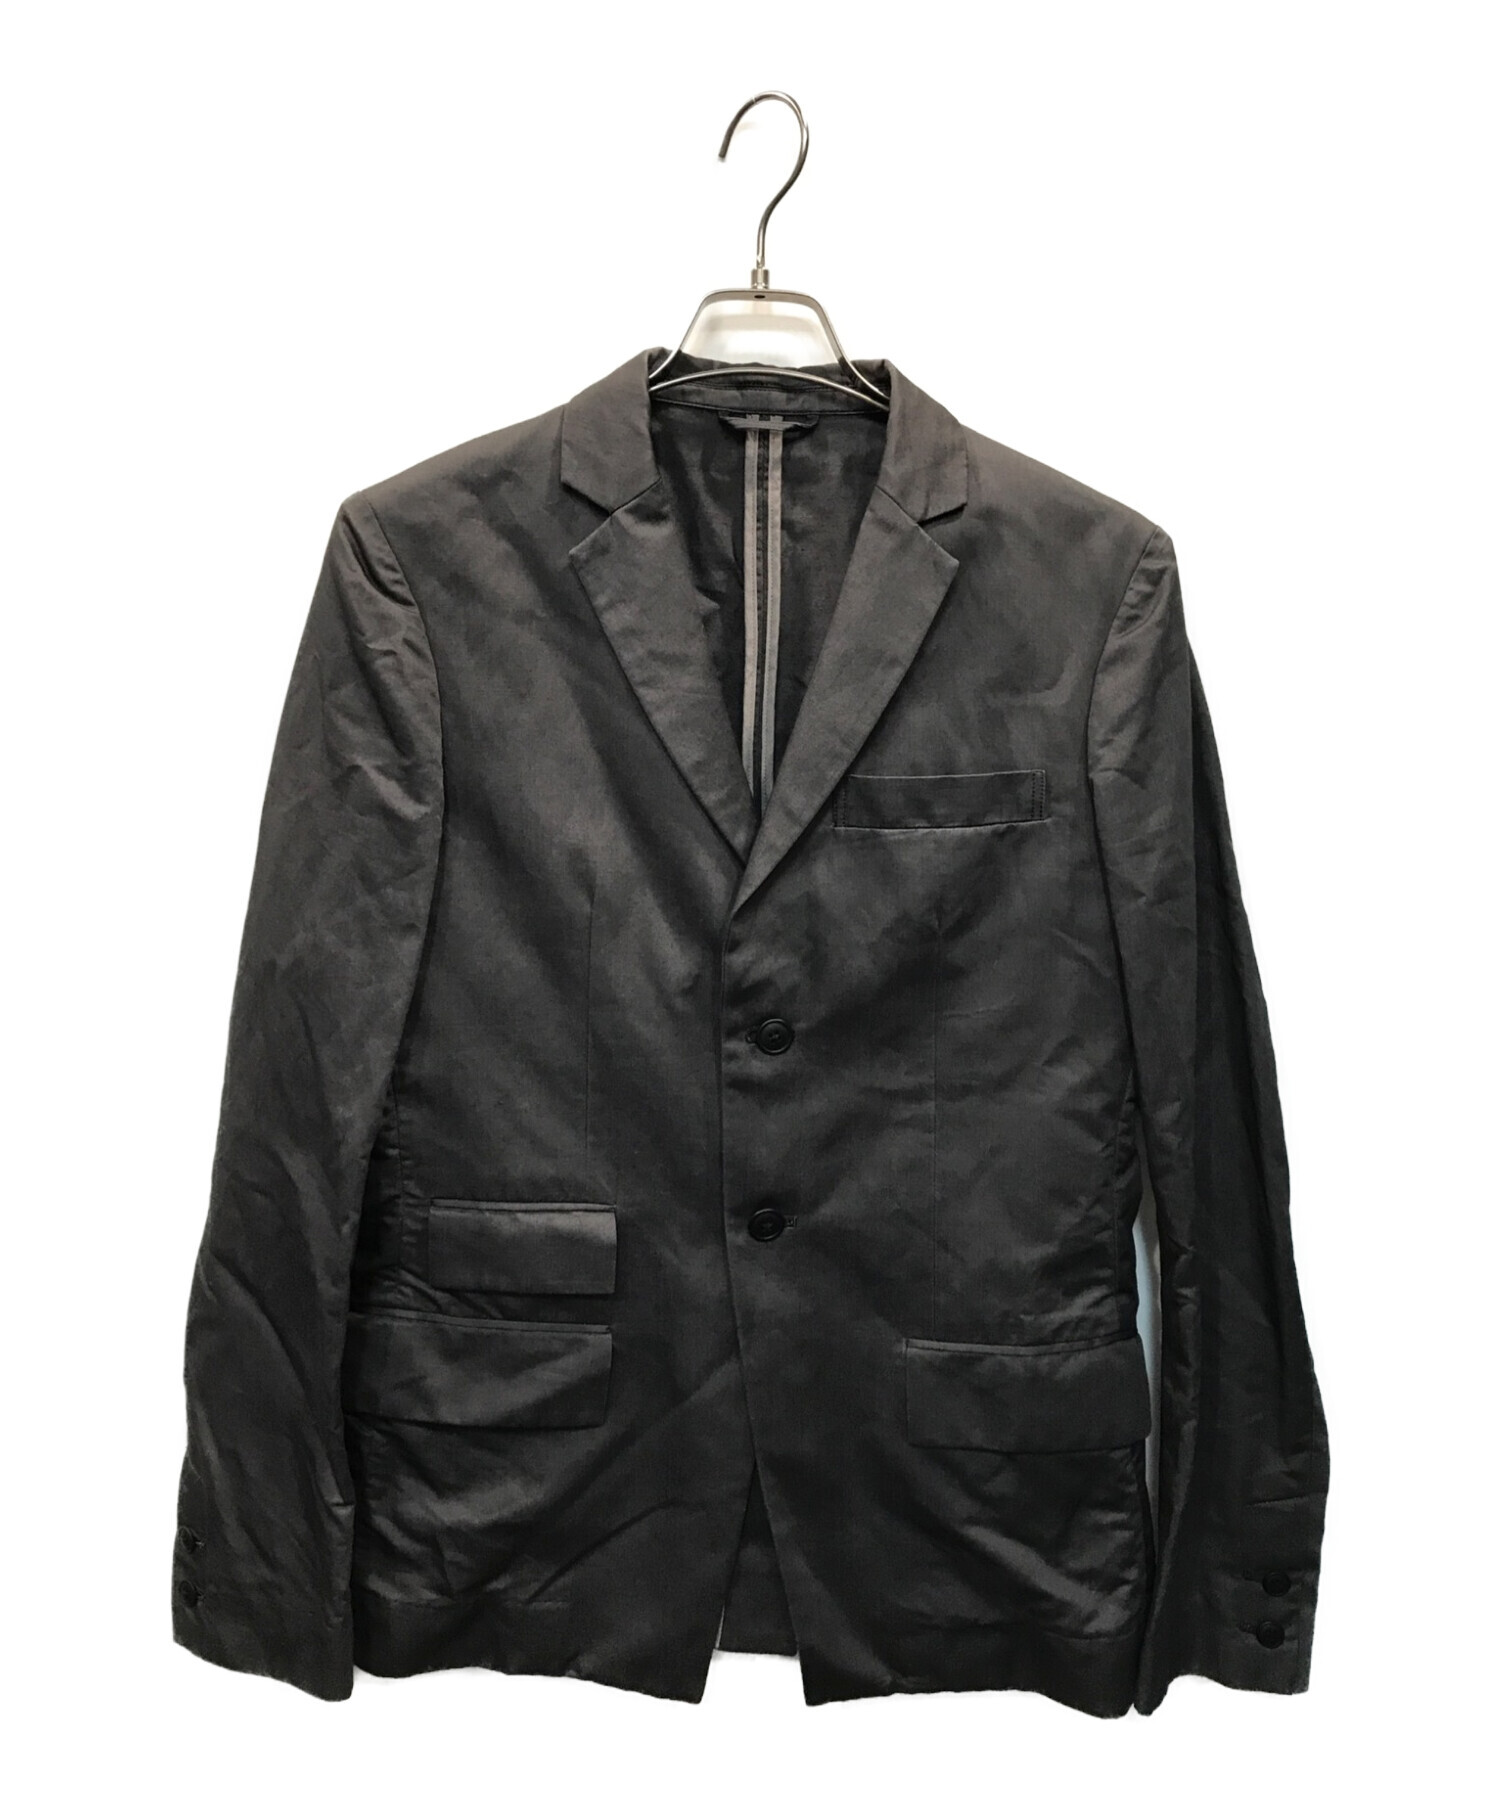 Vivienne Westwood MAN ジャケット 黒肩幅約42cm - Gジャン/デニム 